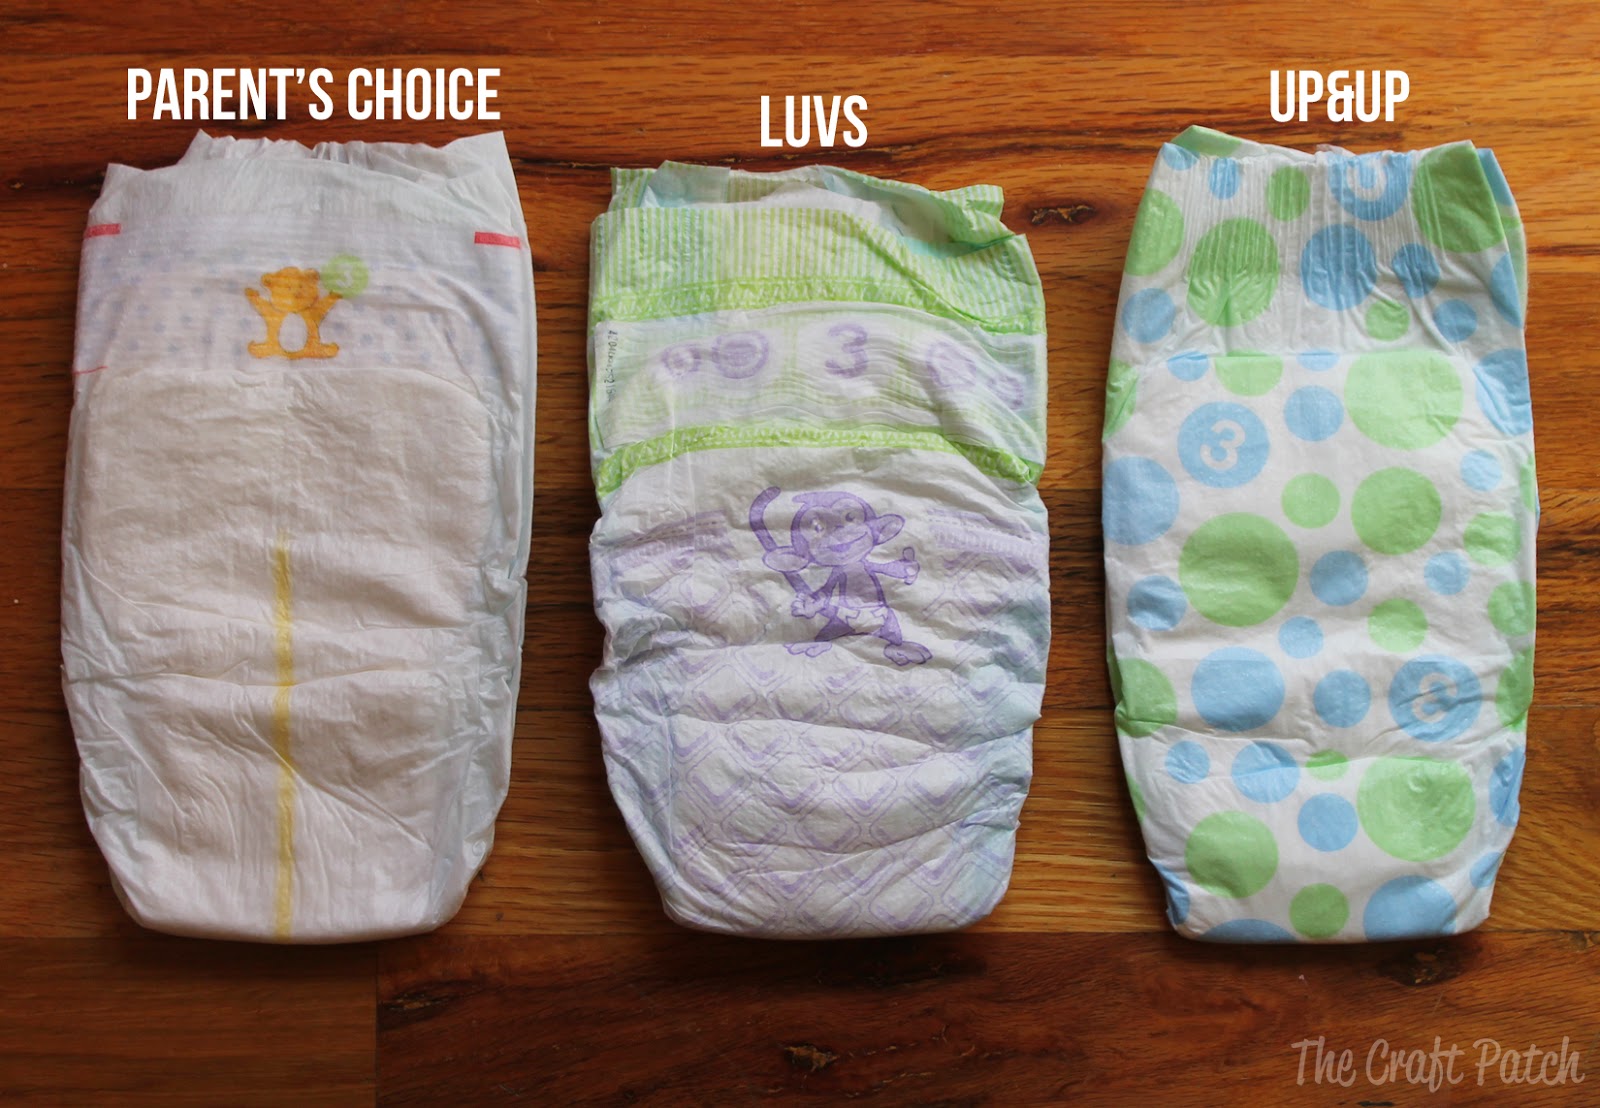 parents choice diapers 3